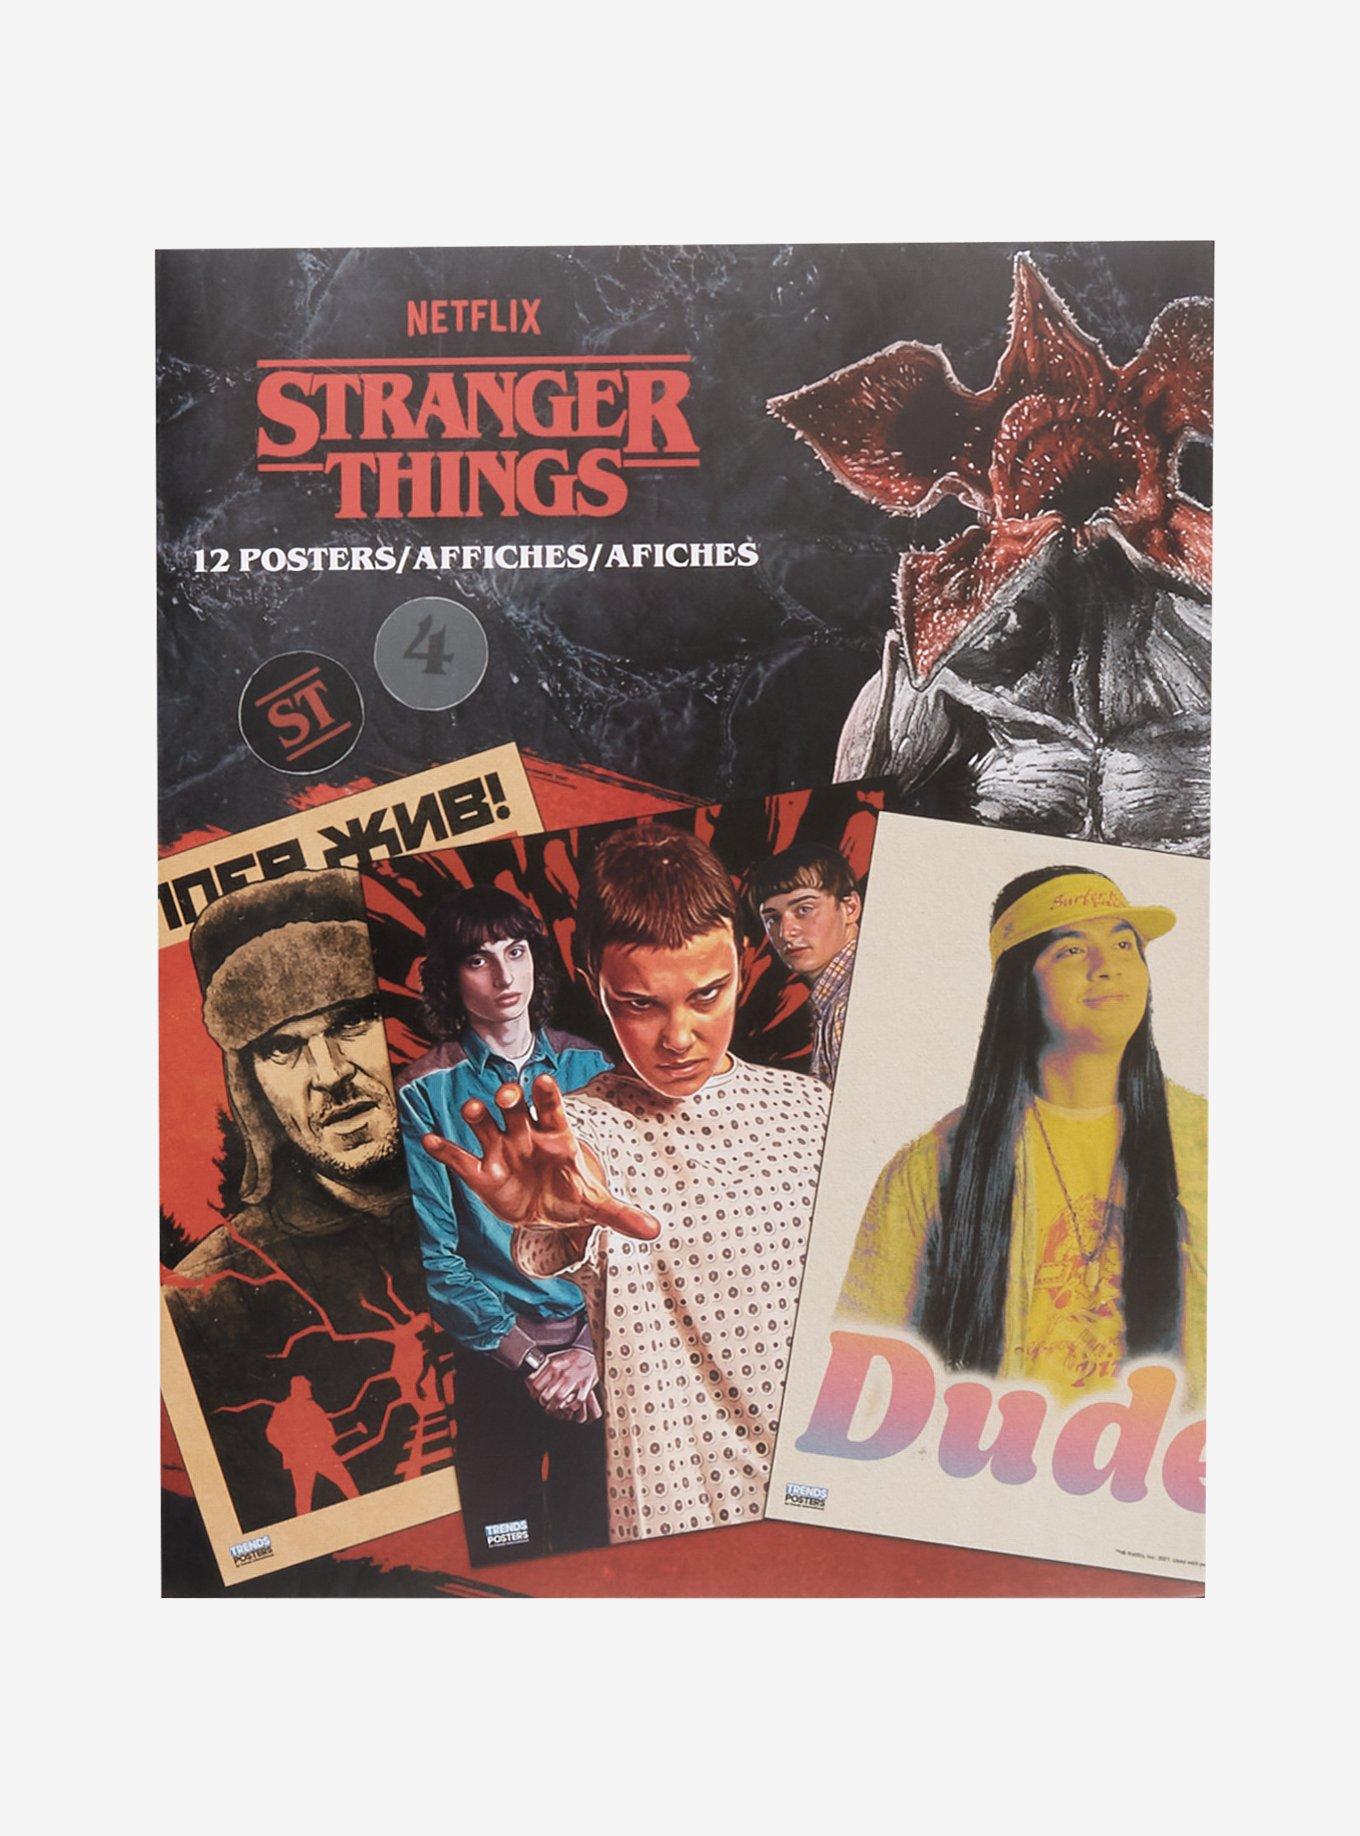 Stranger Things Season 5 Posters [Fan-Made] » Of Stranger Things  Stranger  things monster, Stranger things, Stranger things poster